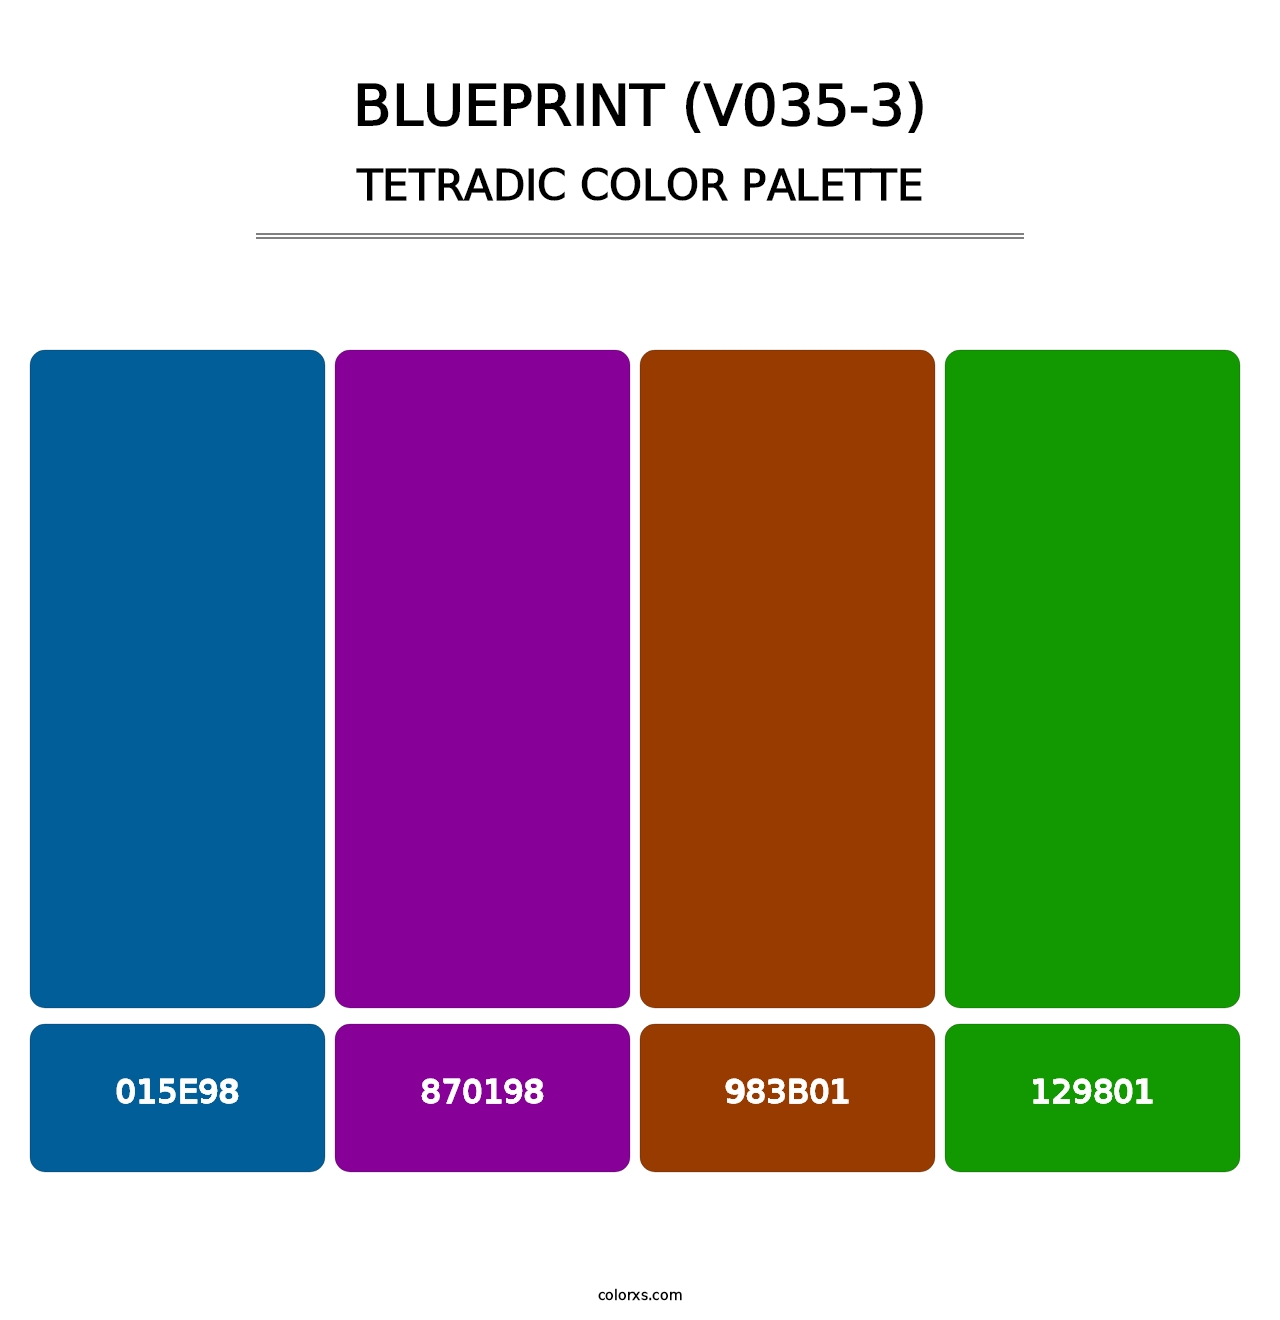 Blueprint (V035-3) - Tetradic Color Palette